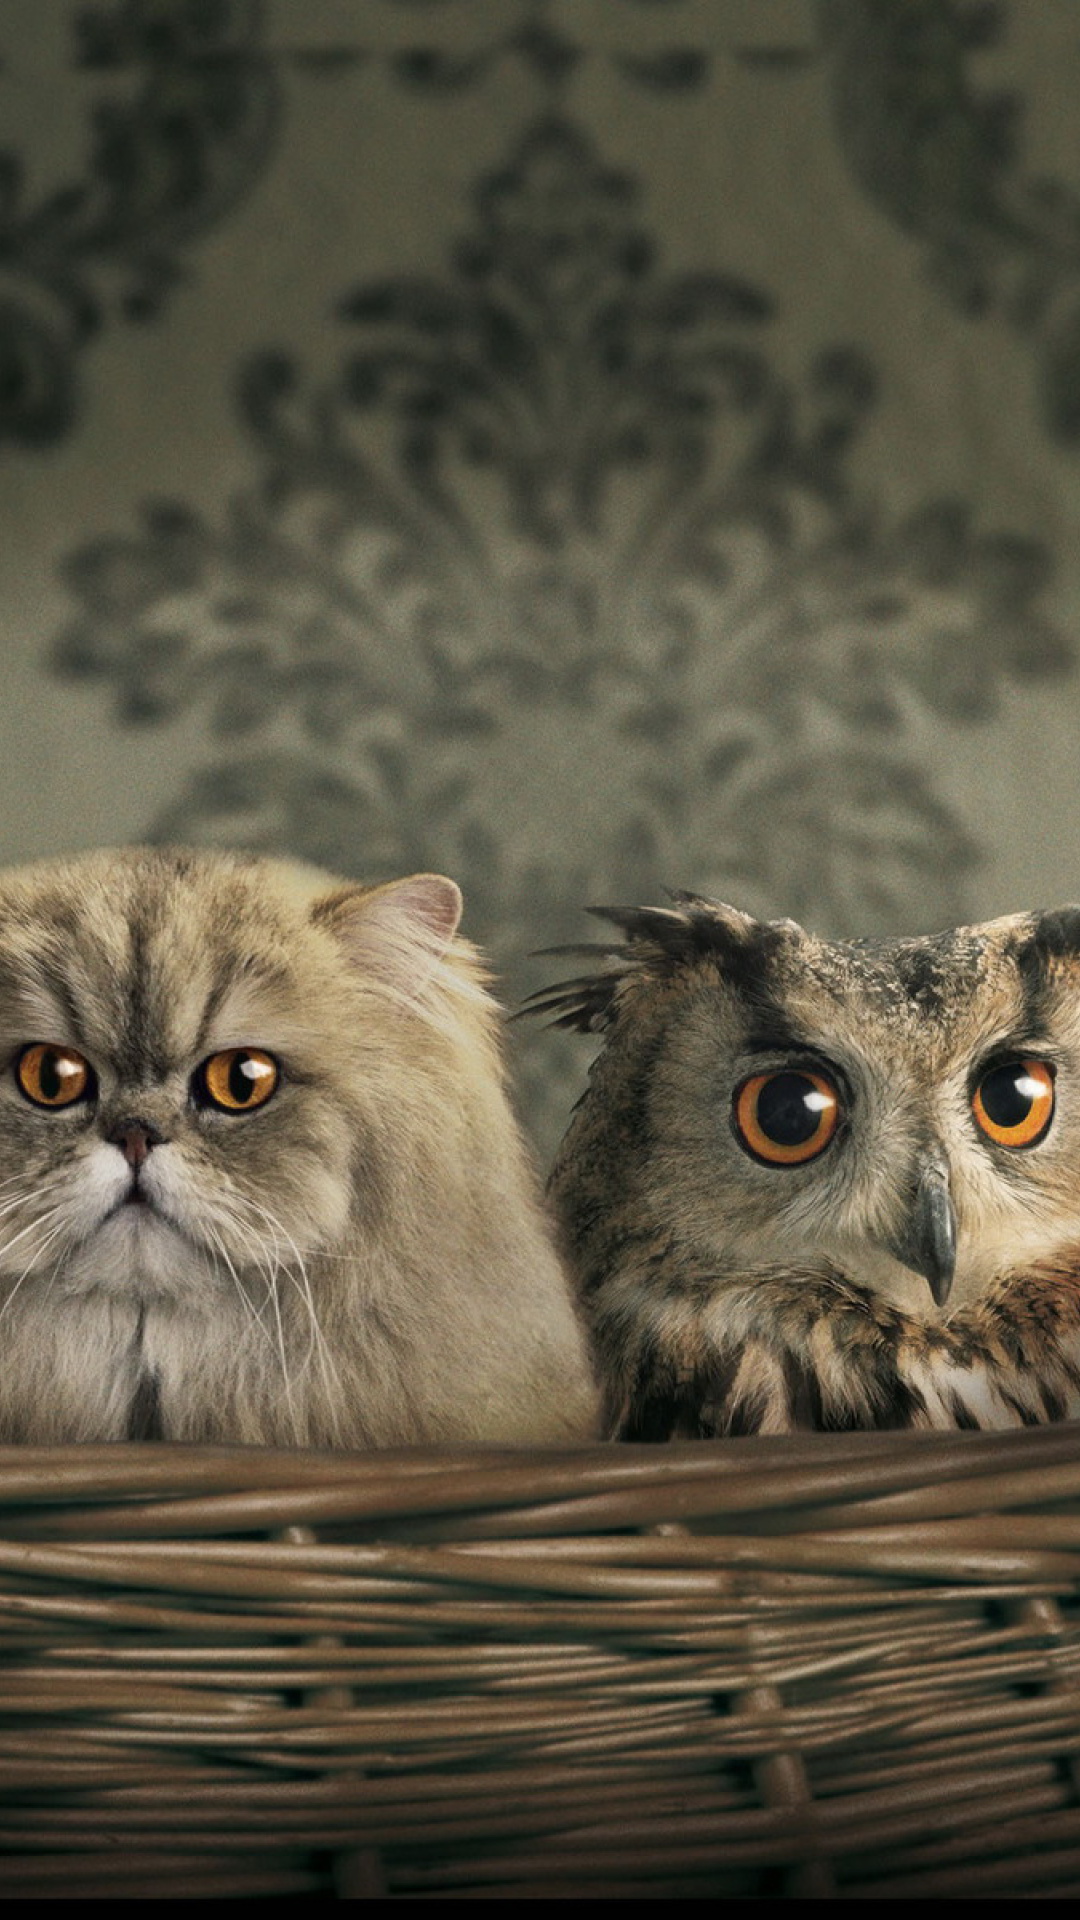 Обои Cats and Owl as Third Wheel 1080x1920